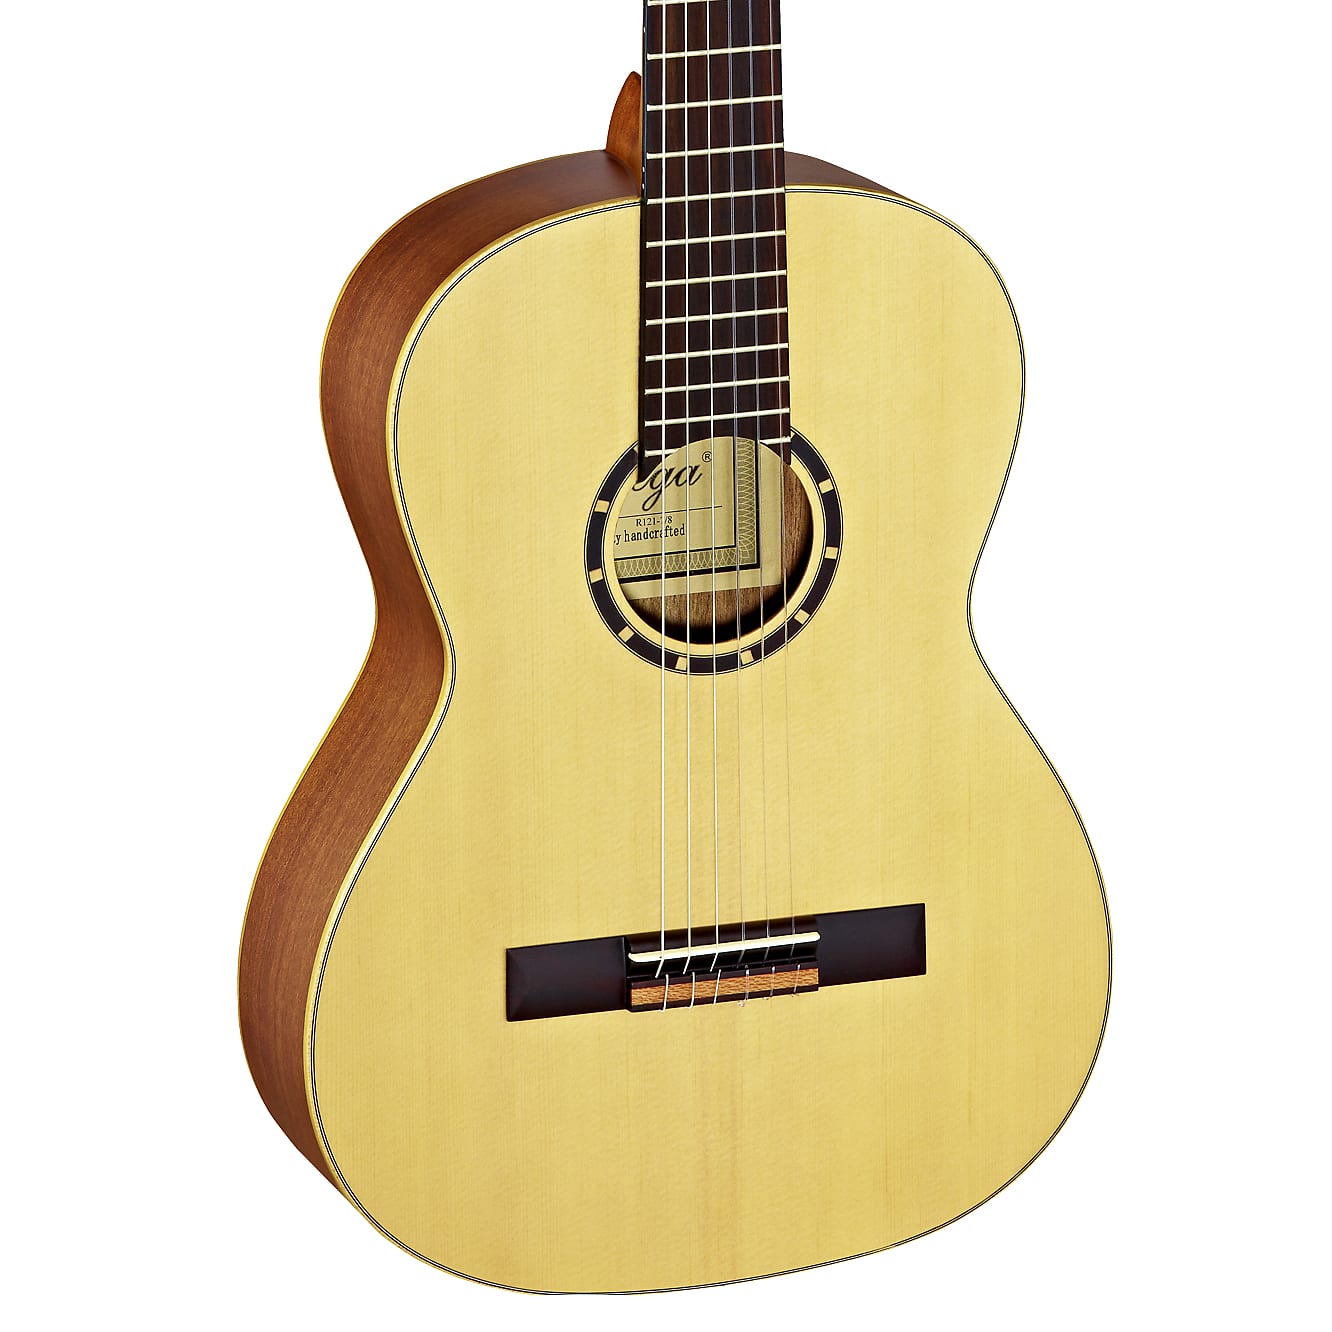 Ortega Family Series 7/8 Size Spruce Top Nylon Acoustic Guitar R121-7/8 w/gigbag